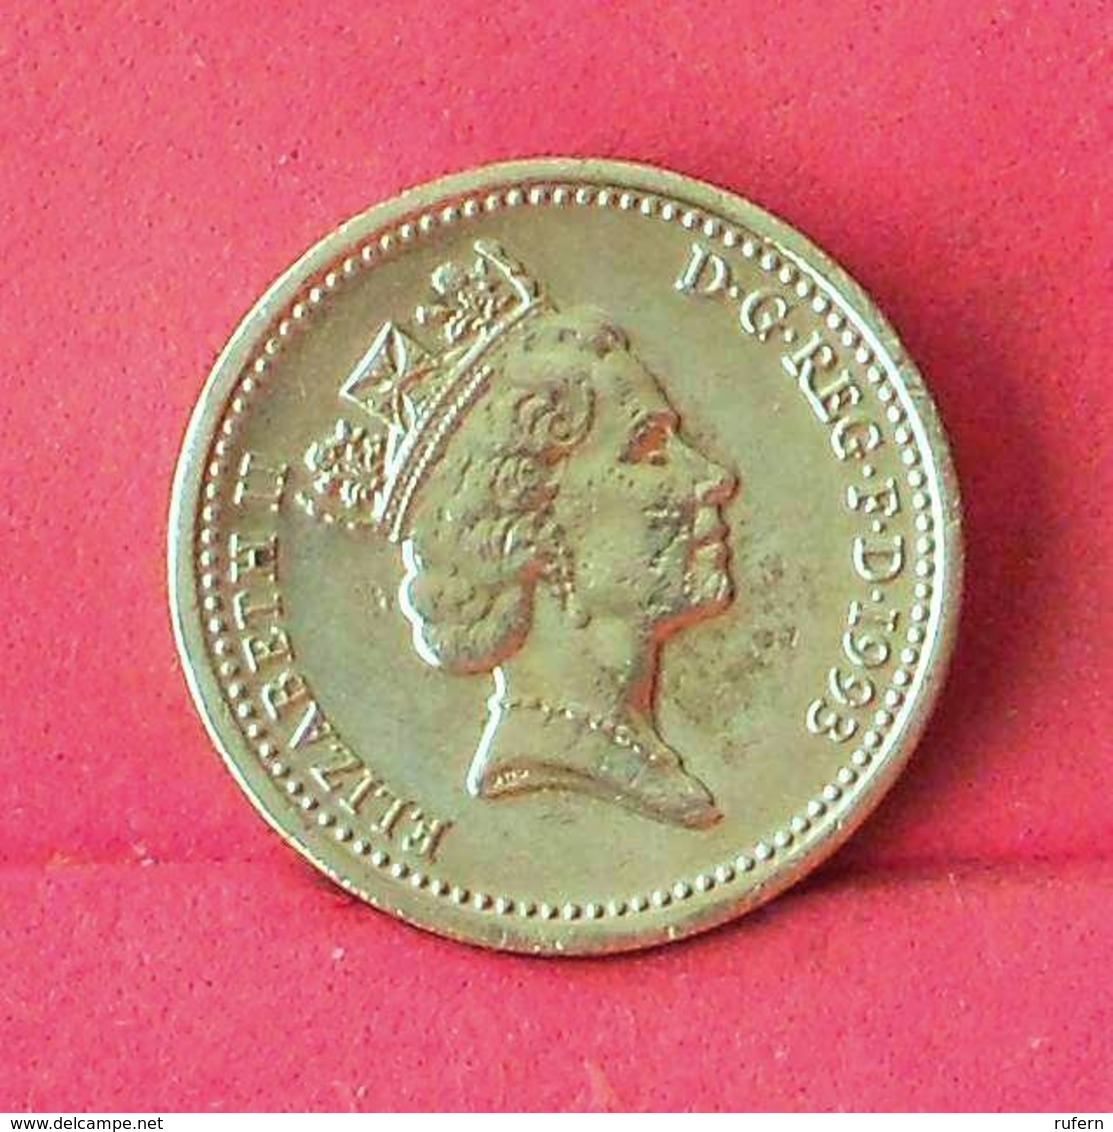 GREAT BRITAIN 1 POUND 1993 -    KM# 964 - (Nº27556) - 1 Pound